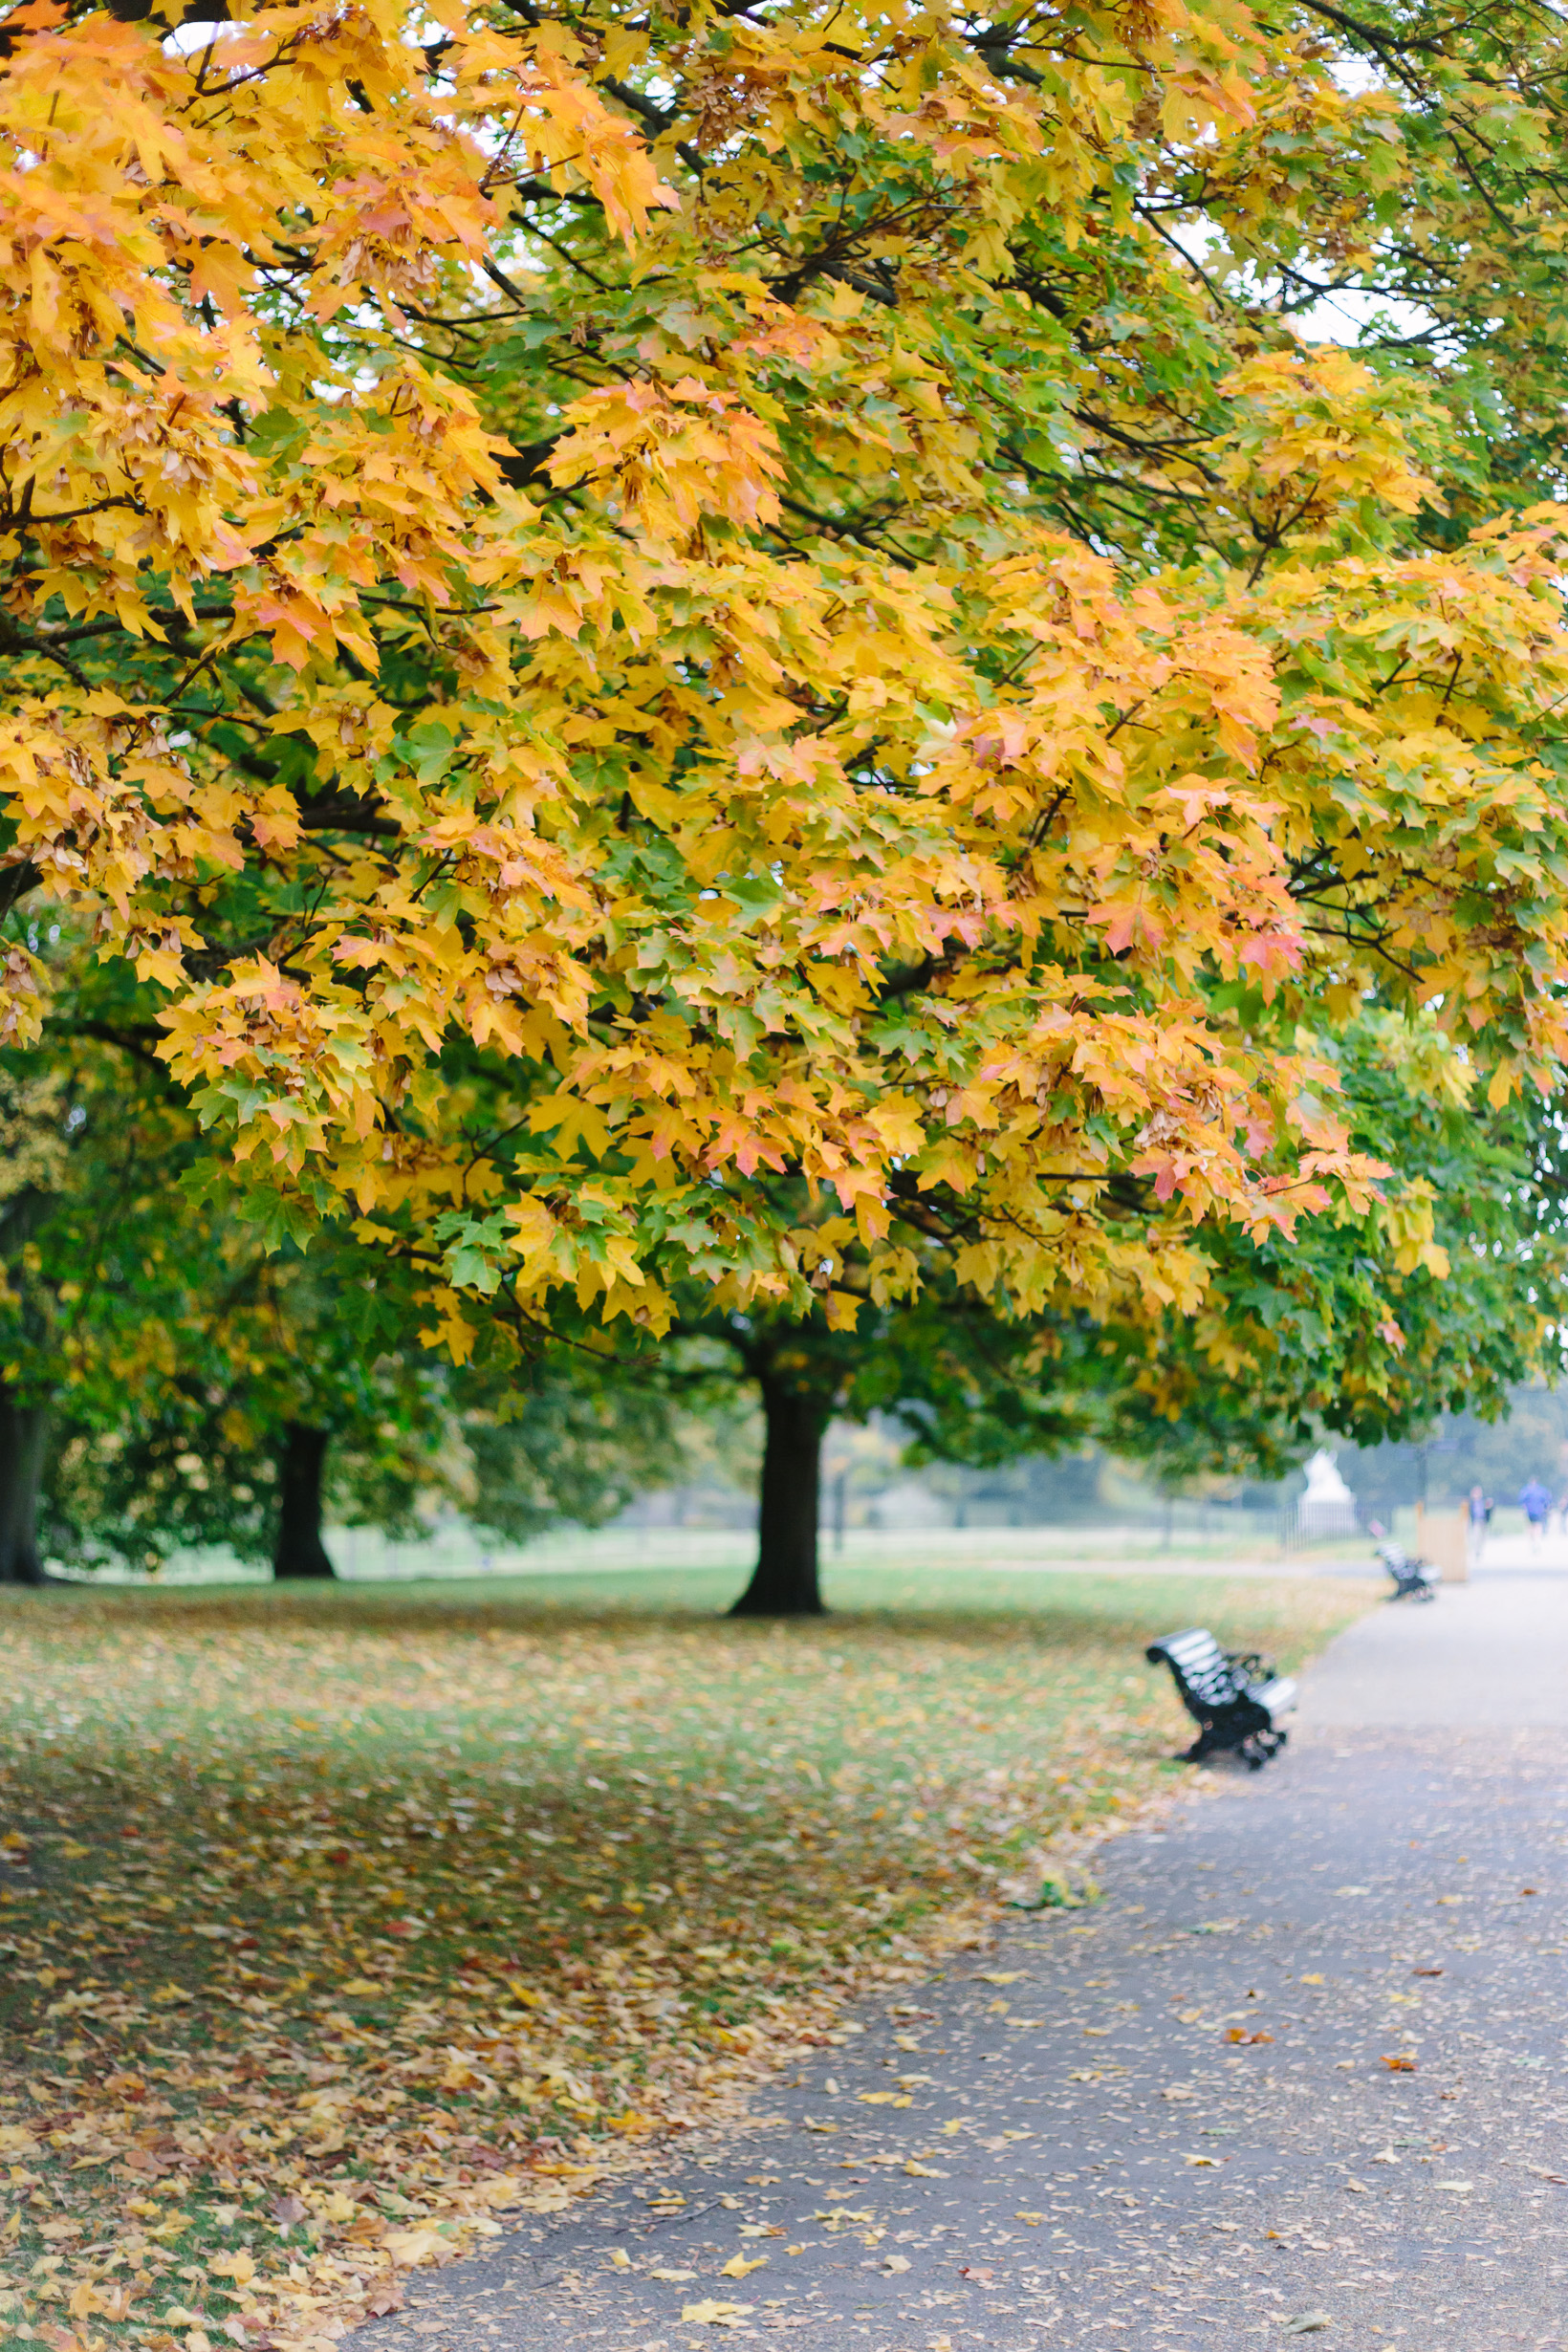 fall-in-hyde-park-london-4108